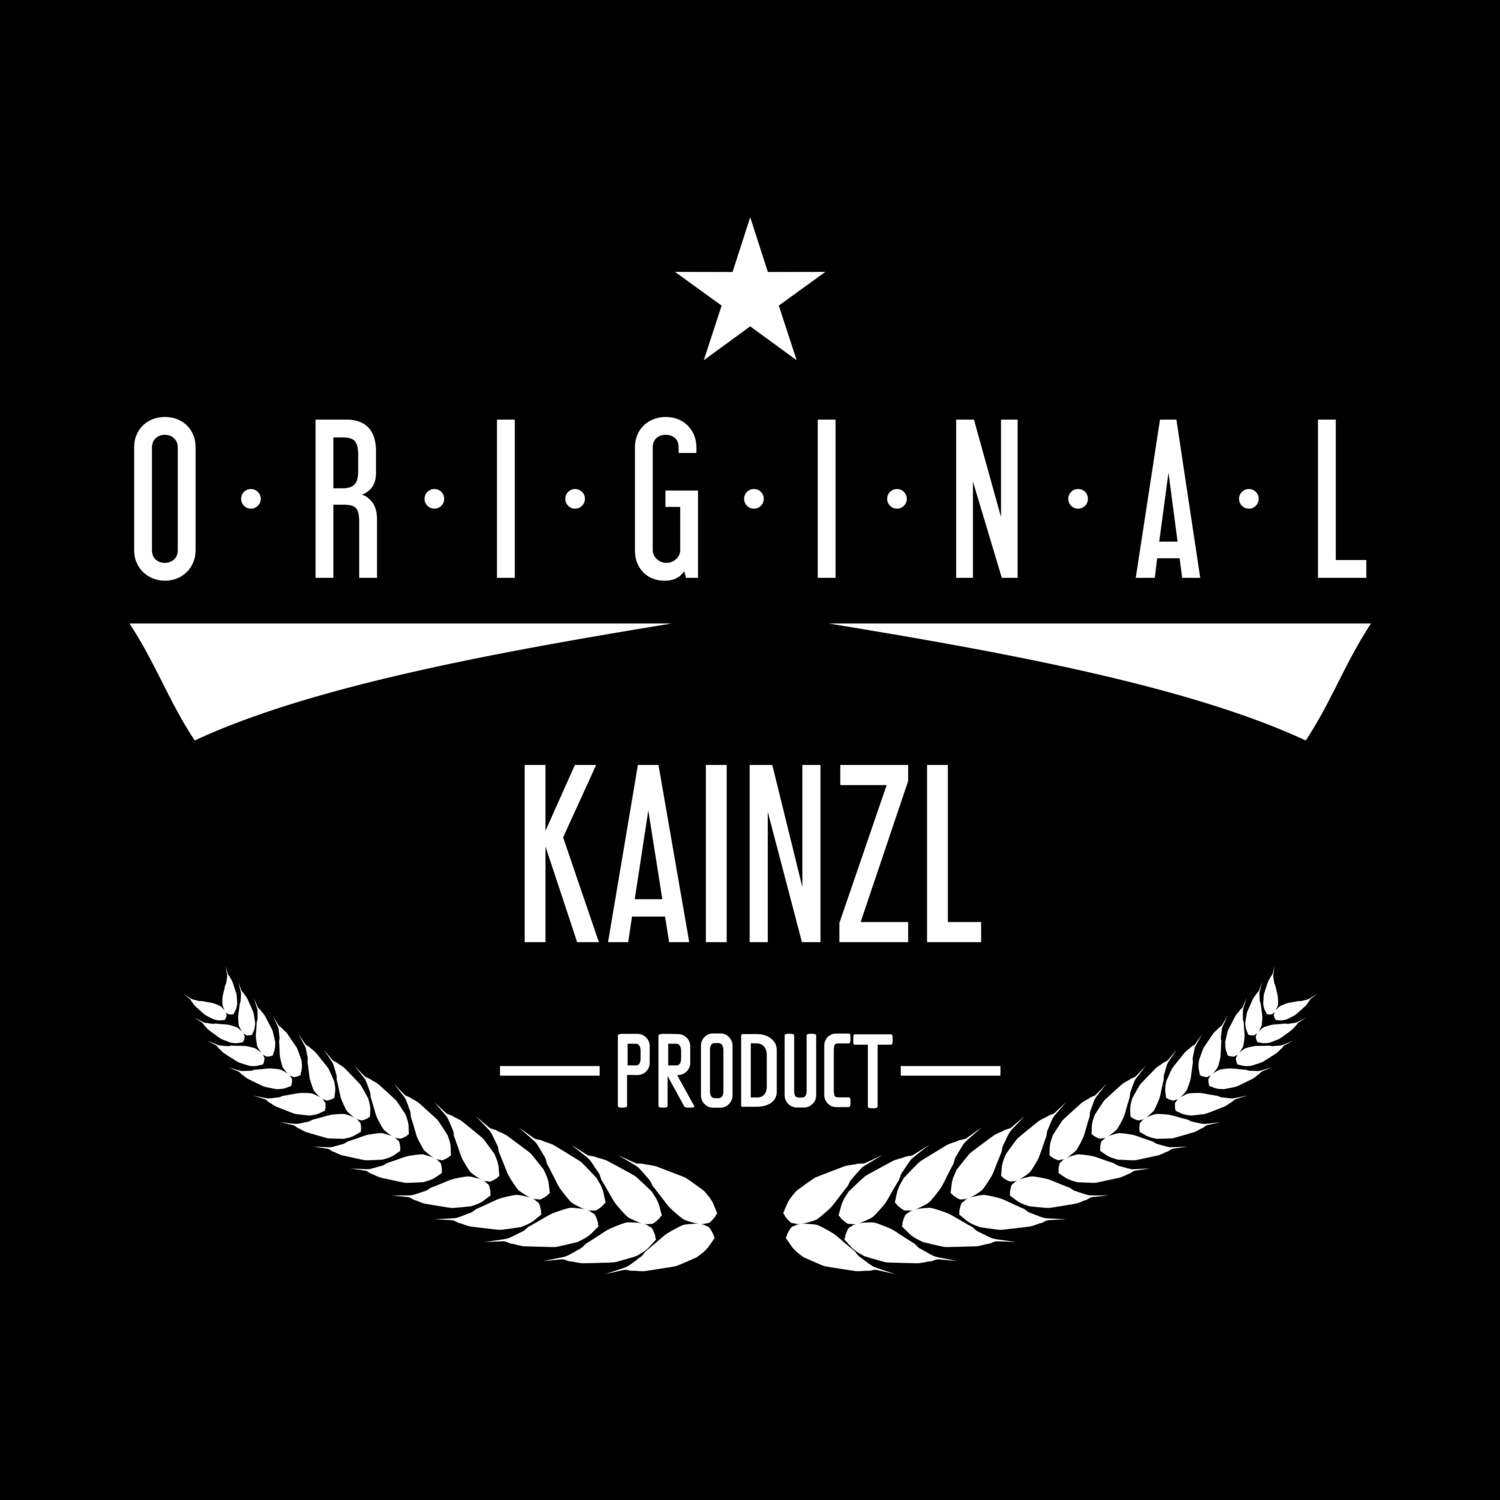 Kainzl T-Shirt »Original Product«